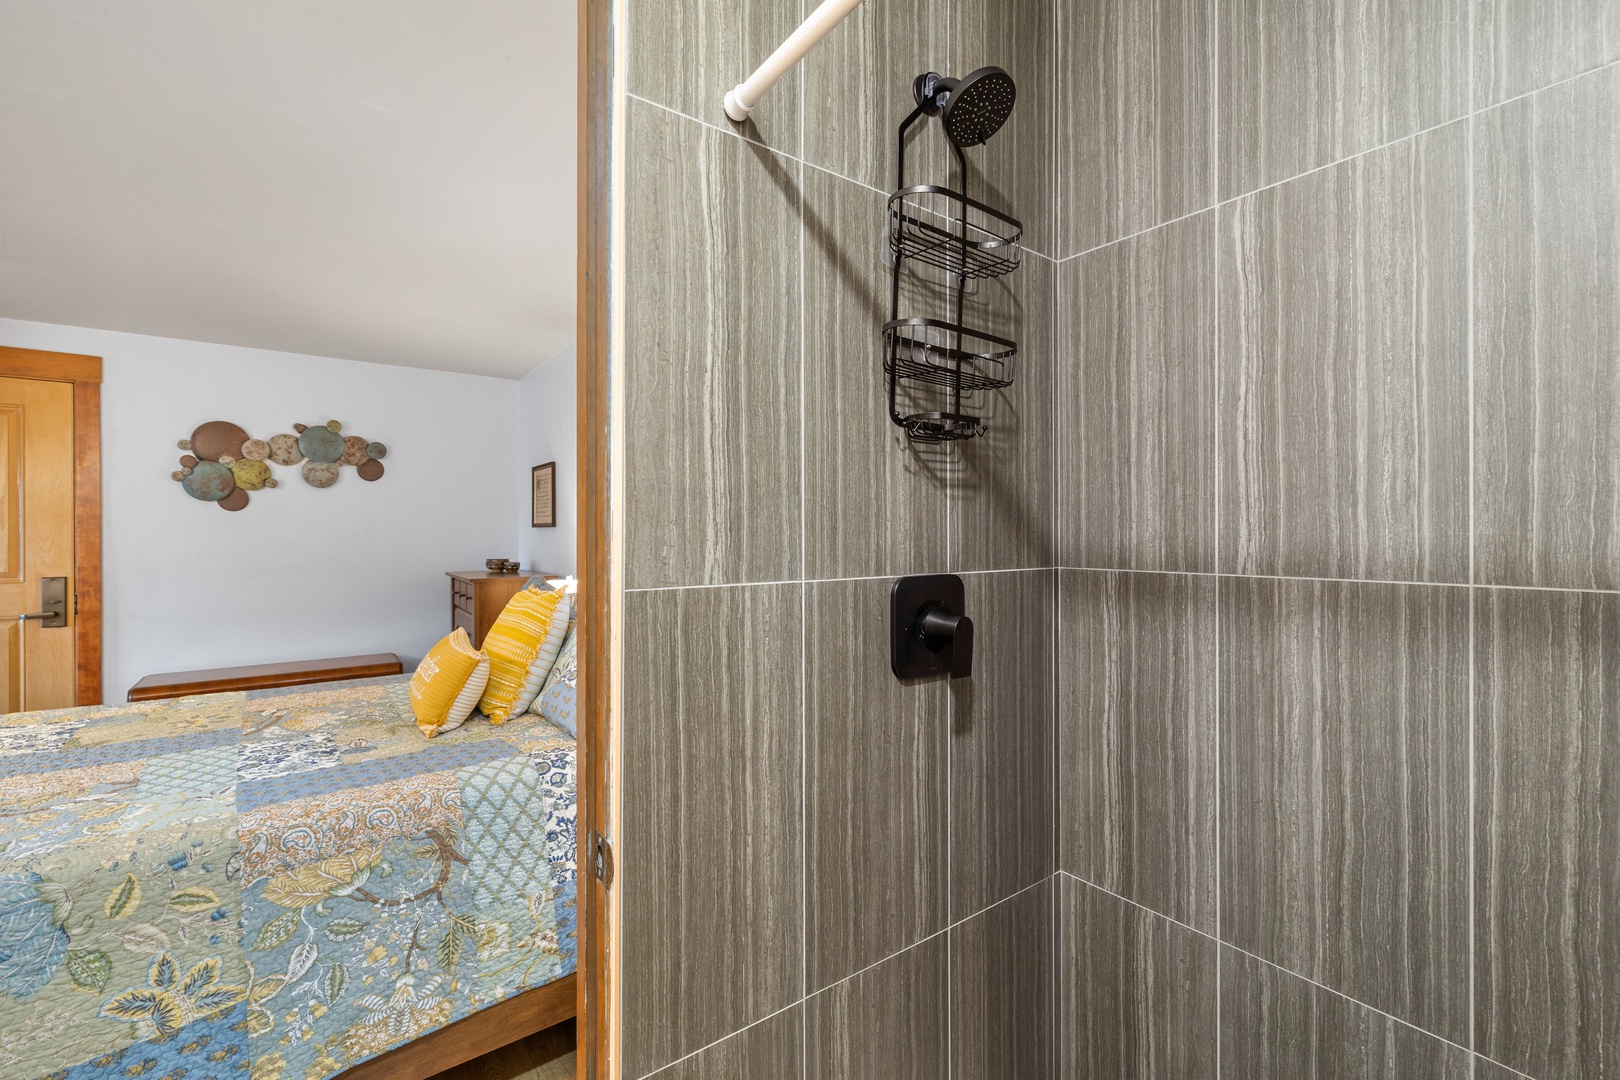 The queen en suite bathroom offers a large single vanity & walk-in shower